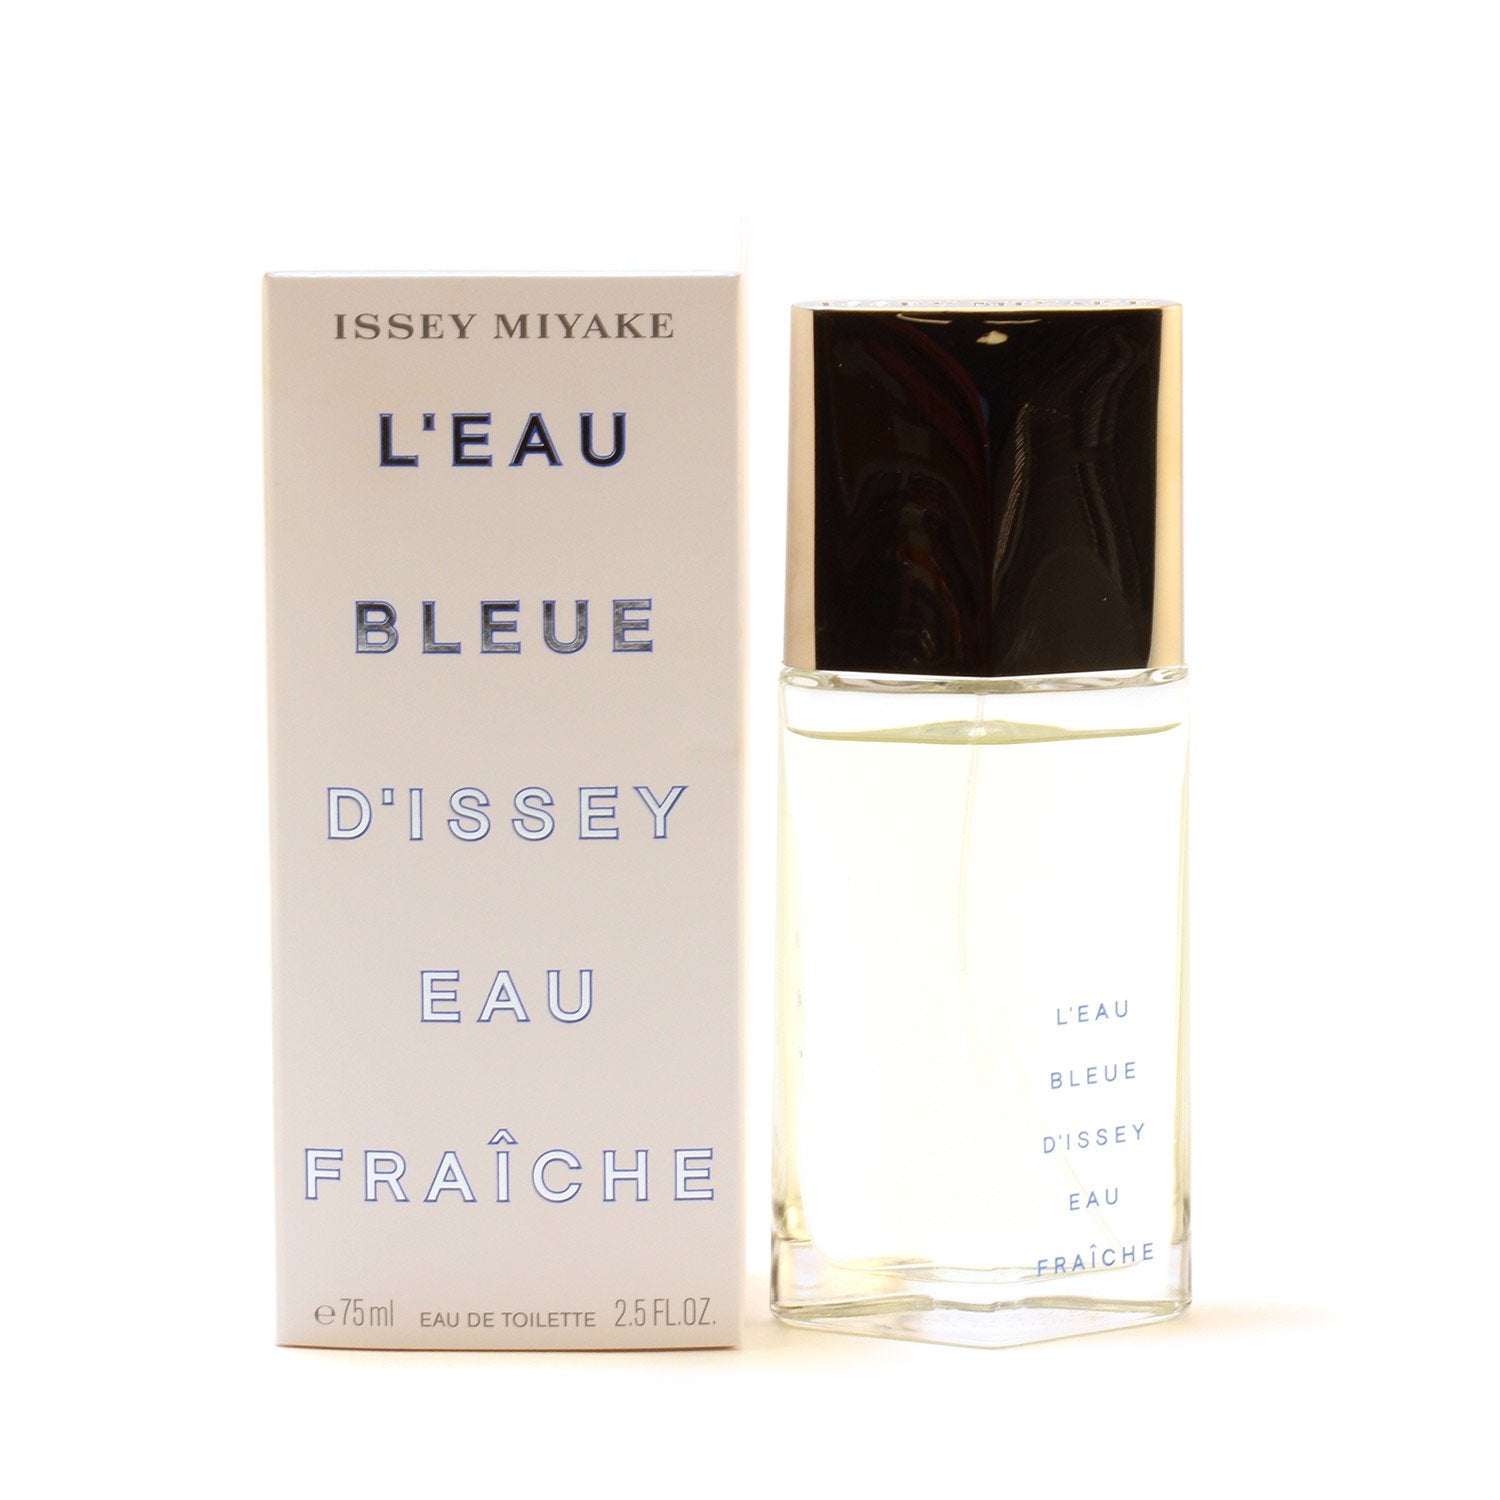 L'eau Bleue D'issey Eau Fraiche by Issey Miyake 2.5 oz EDT for Men